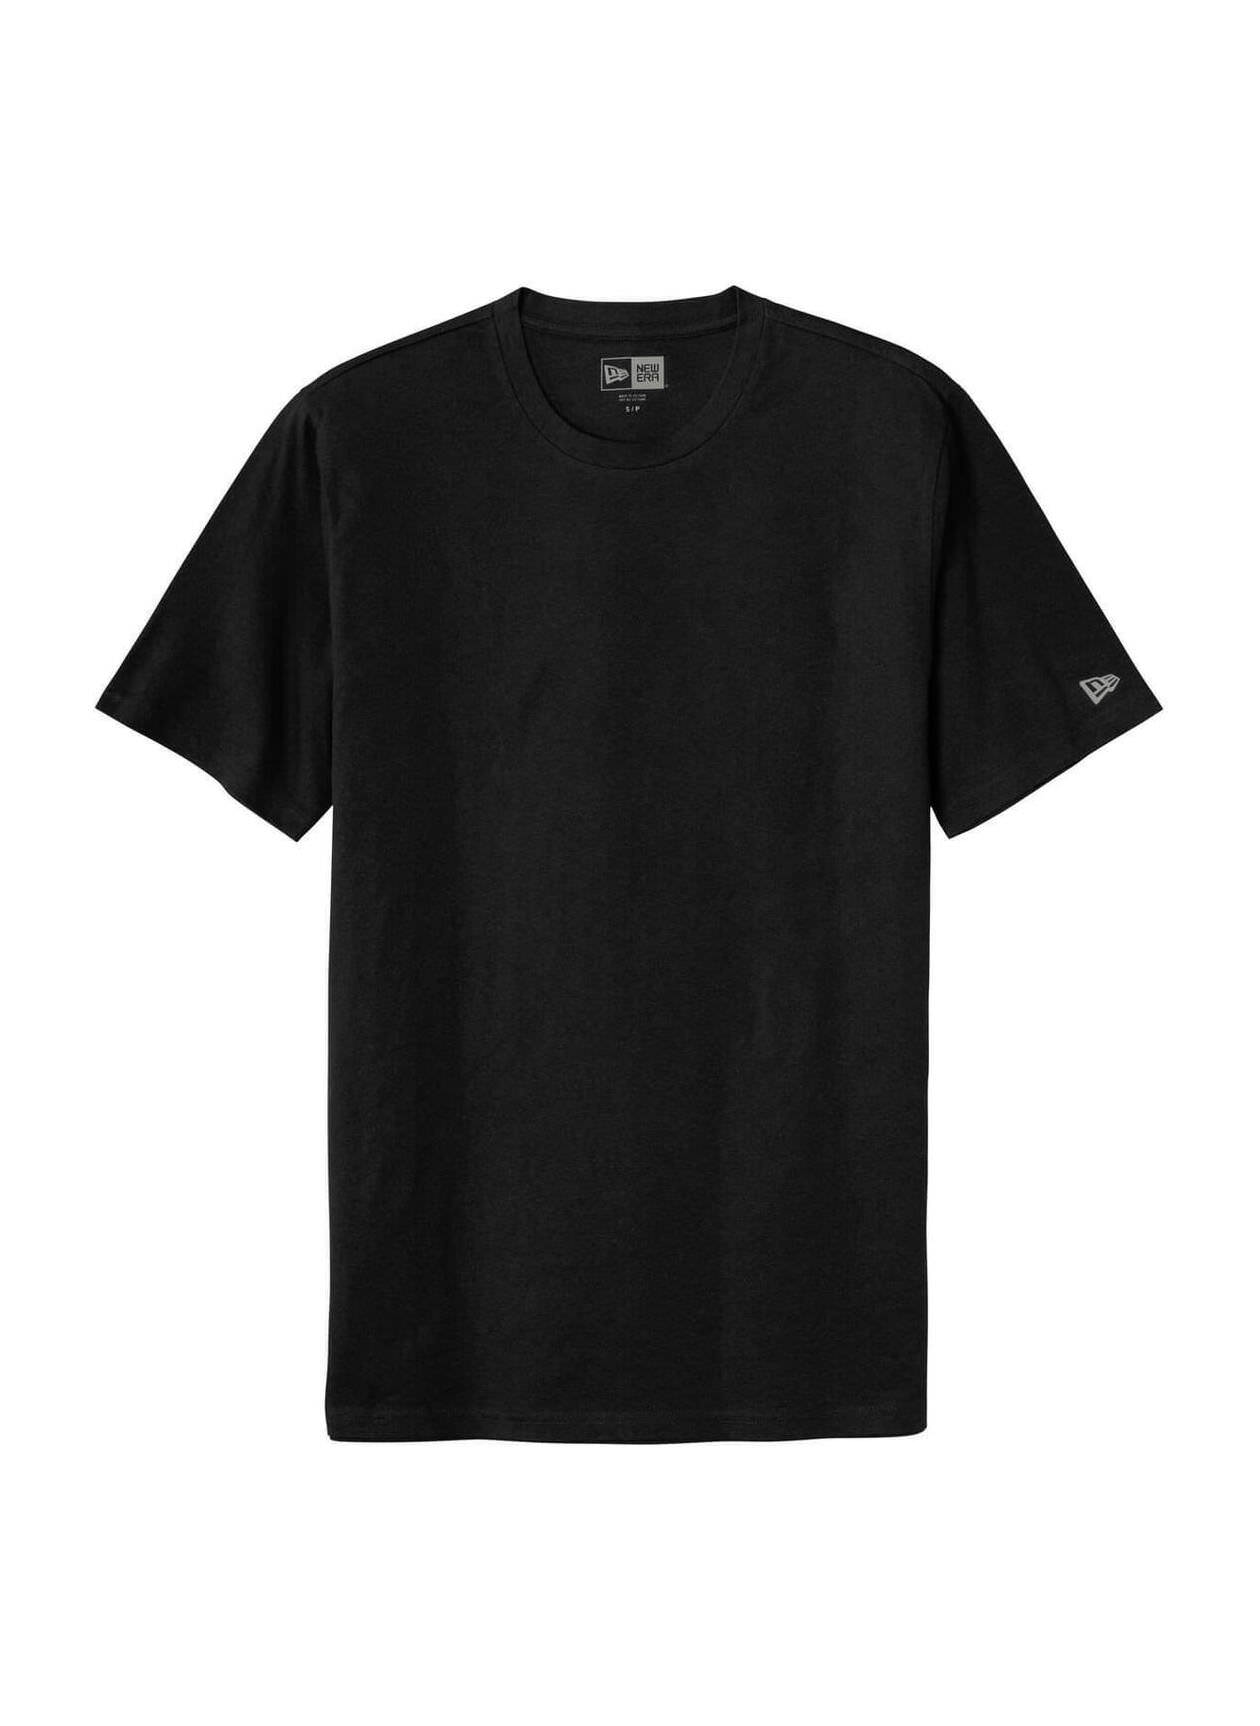 New Era Men's Black Tri-Blend T-Shirt